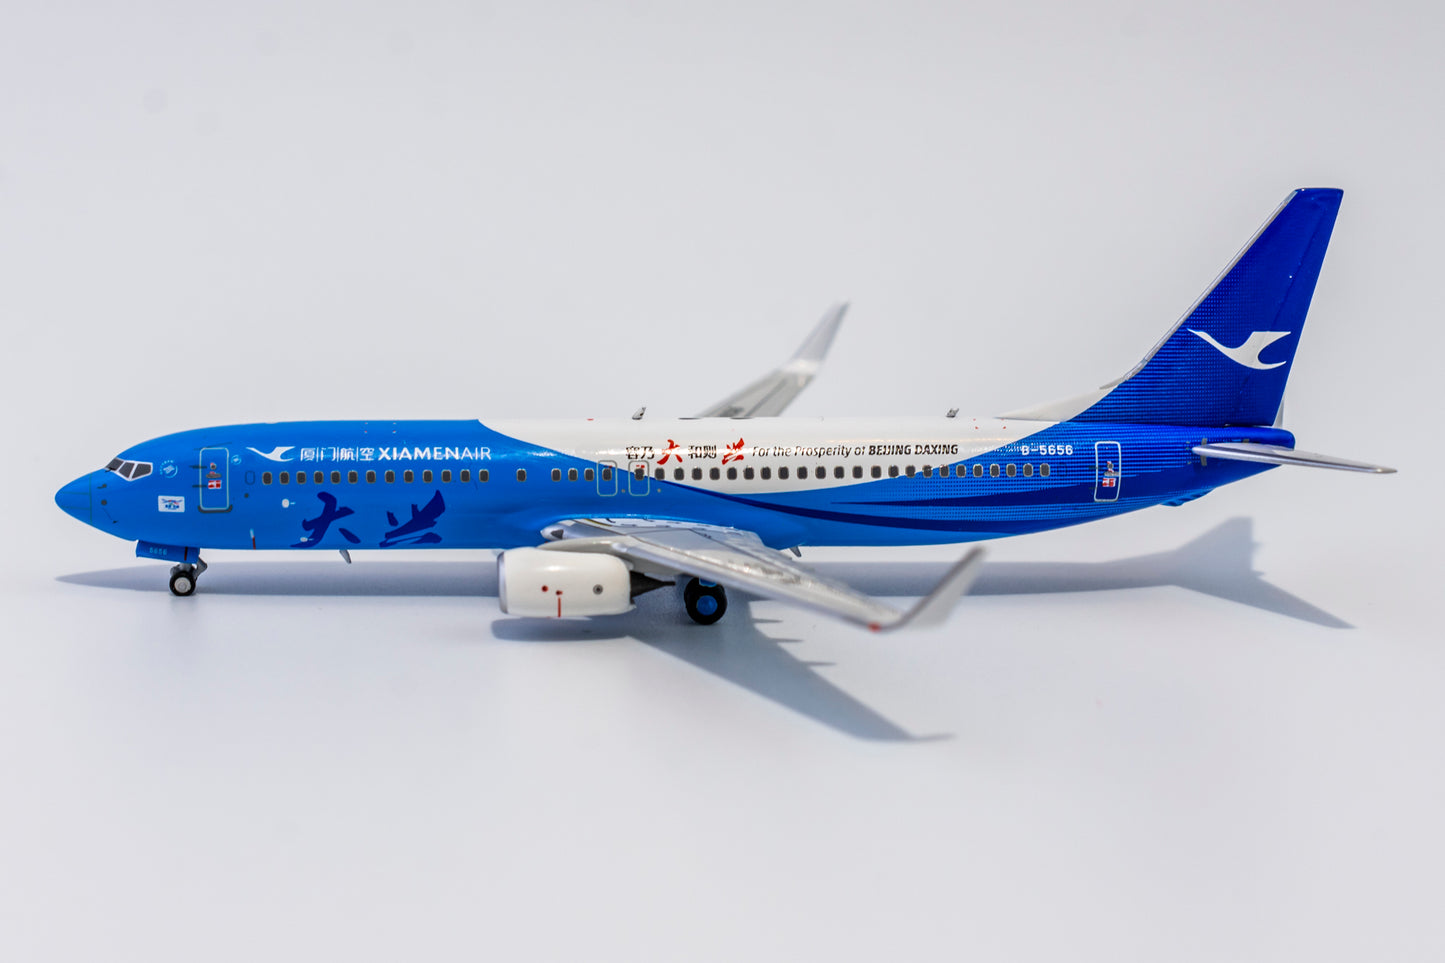 1:400 NG Models Xiamen Air 737-800 "Bejing" B-5656 58082